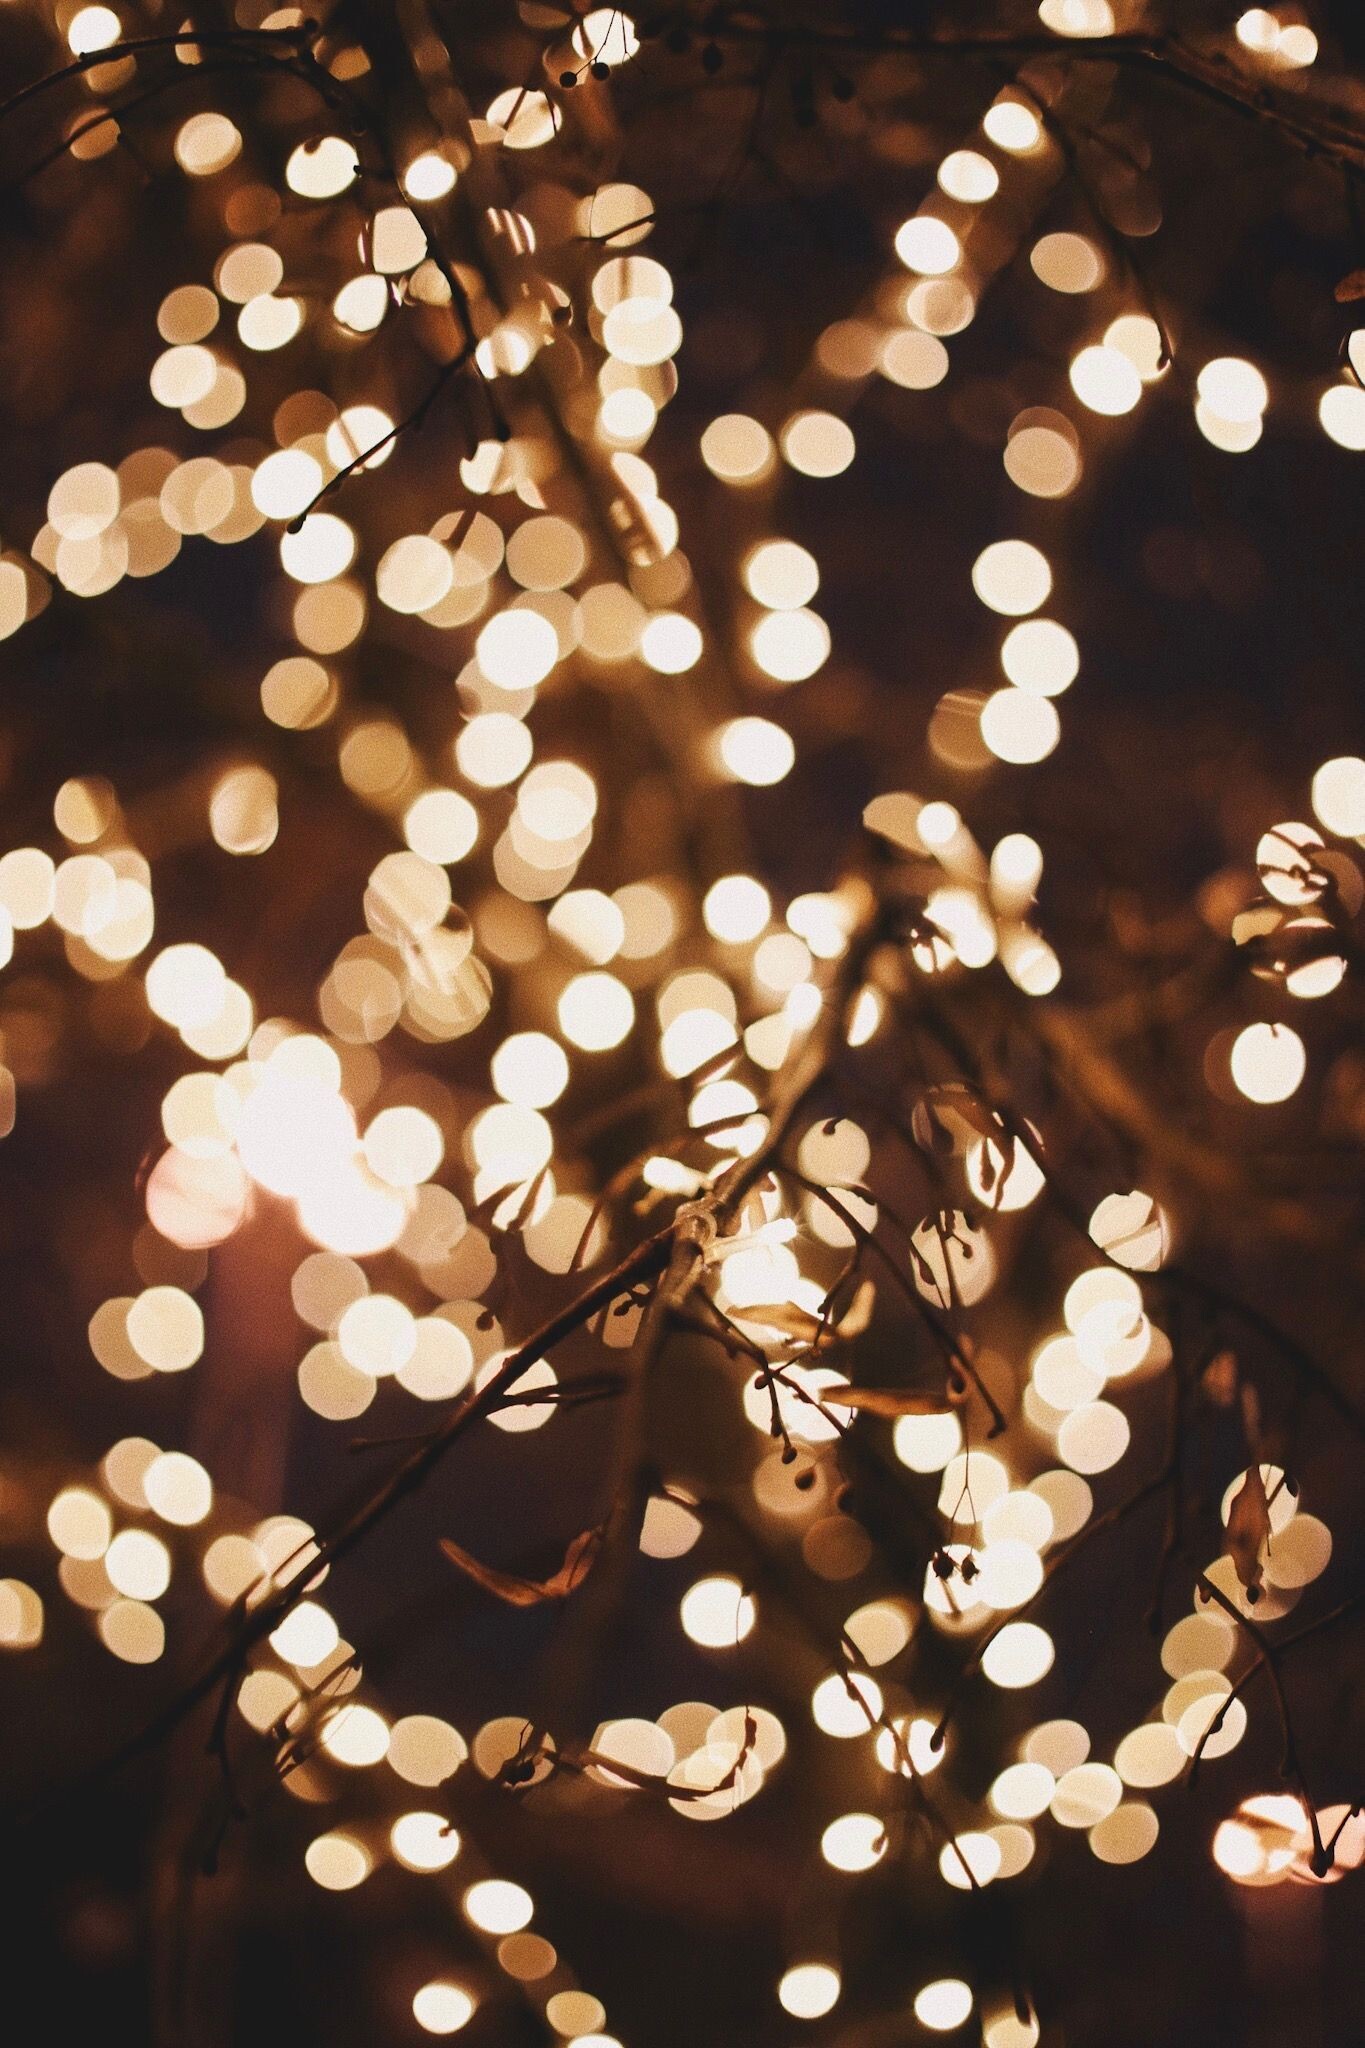 Gold Lights: Christmas lights, Sparkling golden bubbles, Out-of-focus blurred lights. 1370x2050 HD Wallpaper.